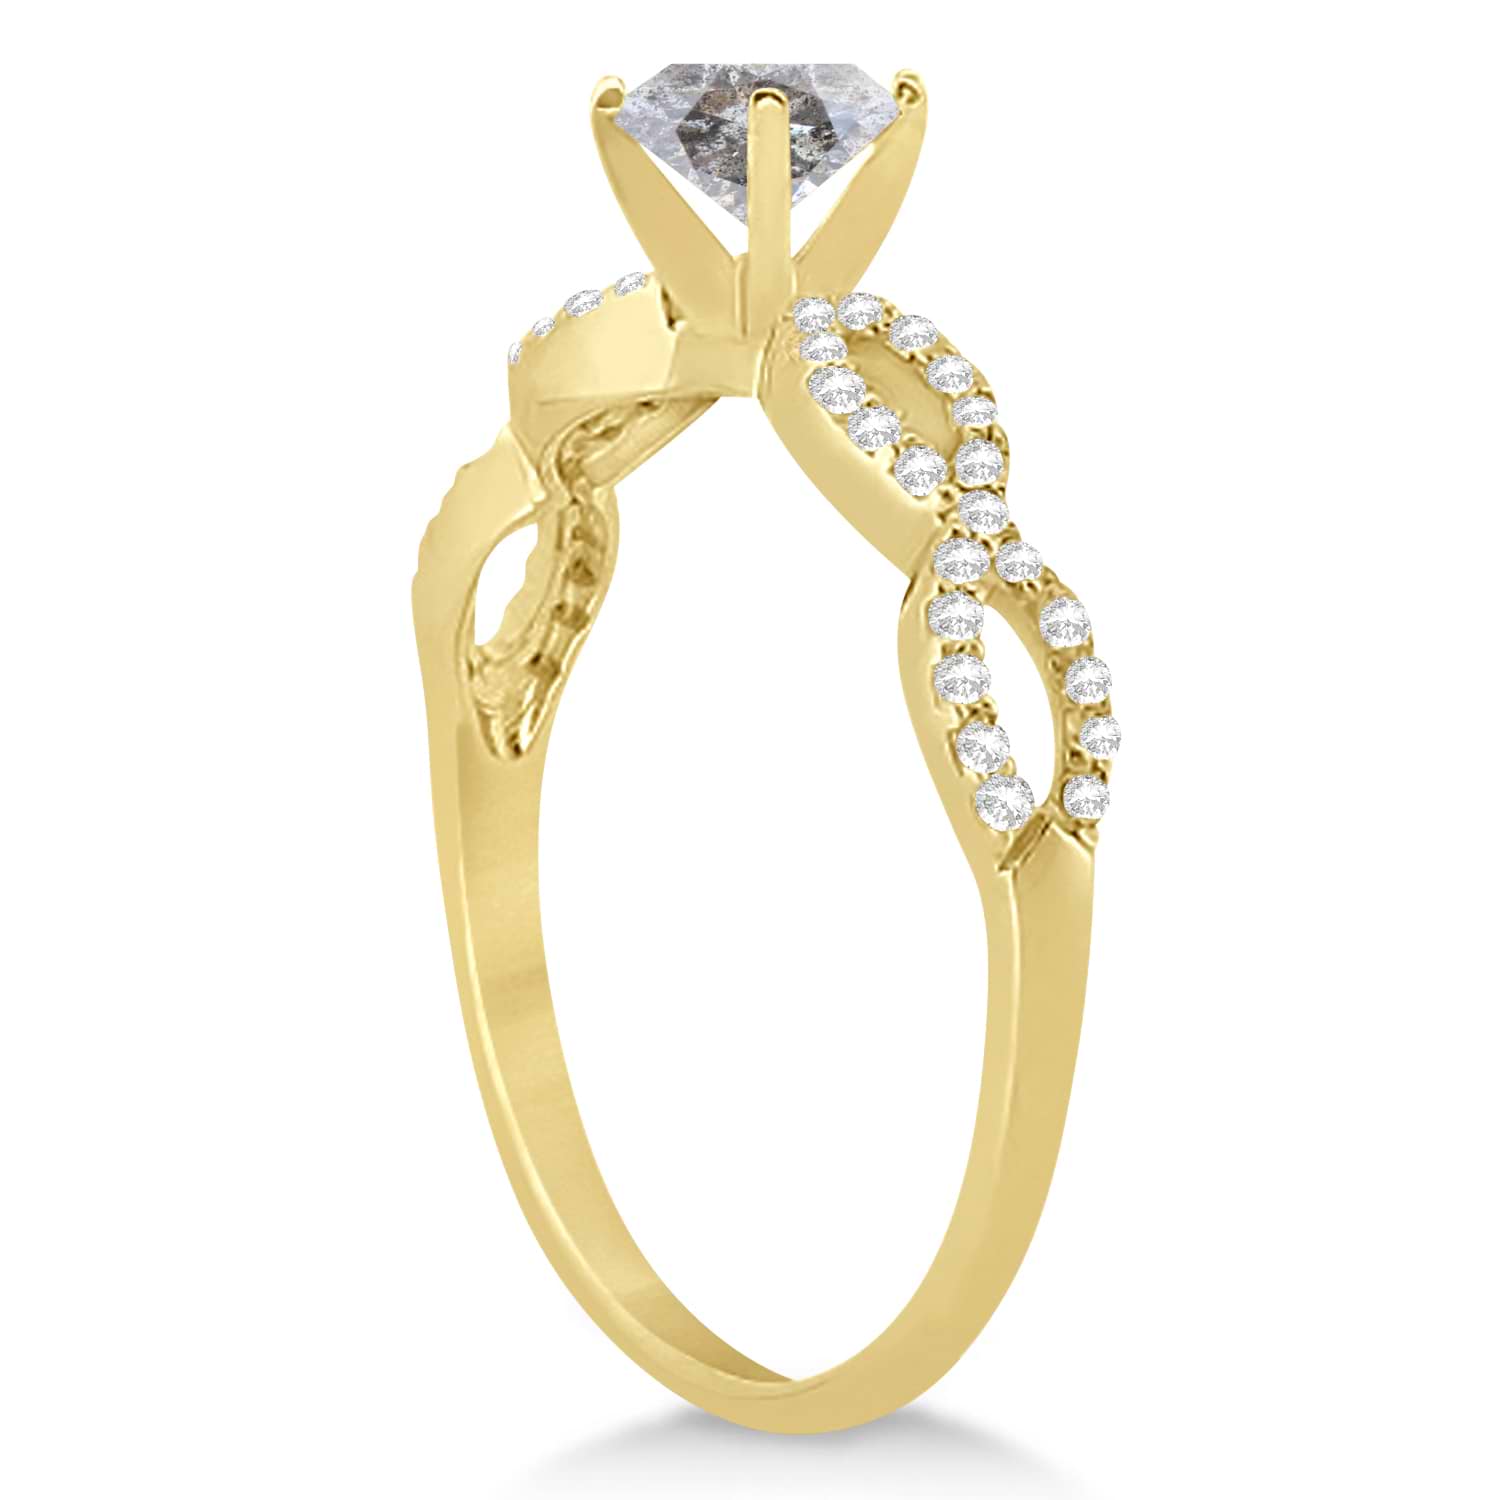 Infinity Cushion-Cut Salt & Pepper Diamond Engagement Ring 14k Yellow Gold (0.50ct)